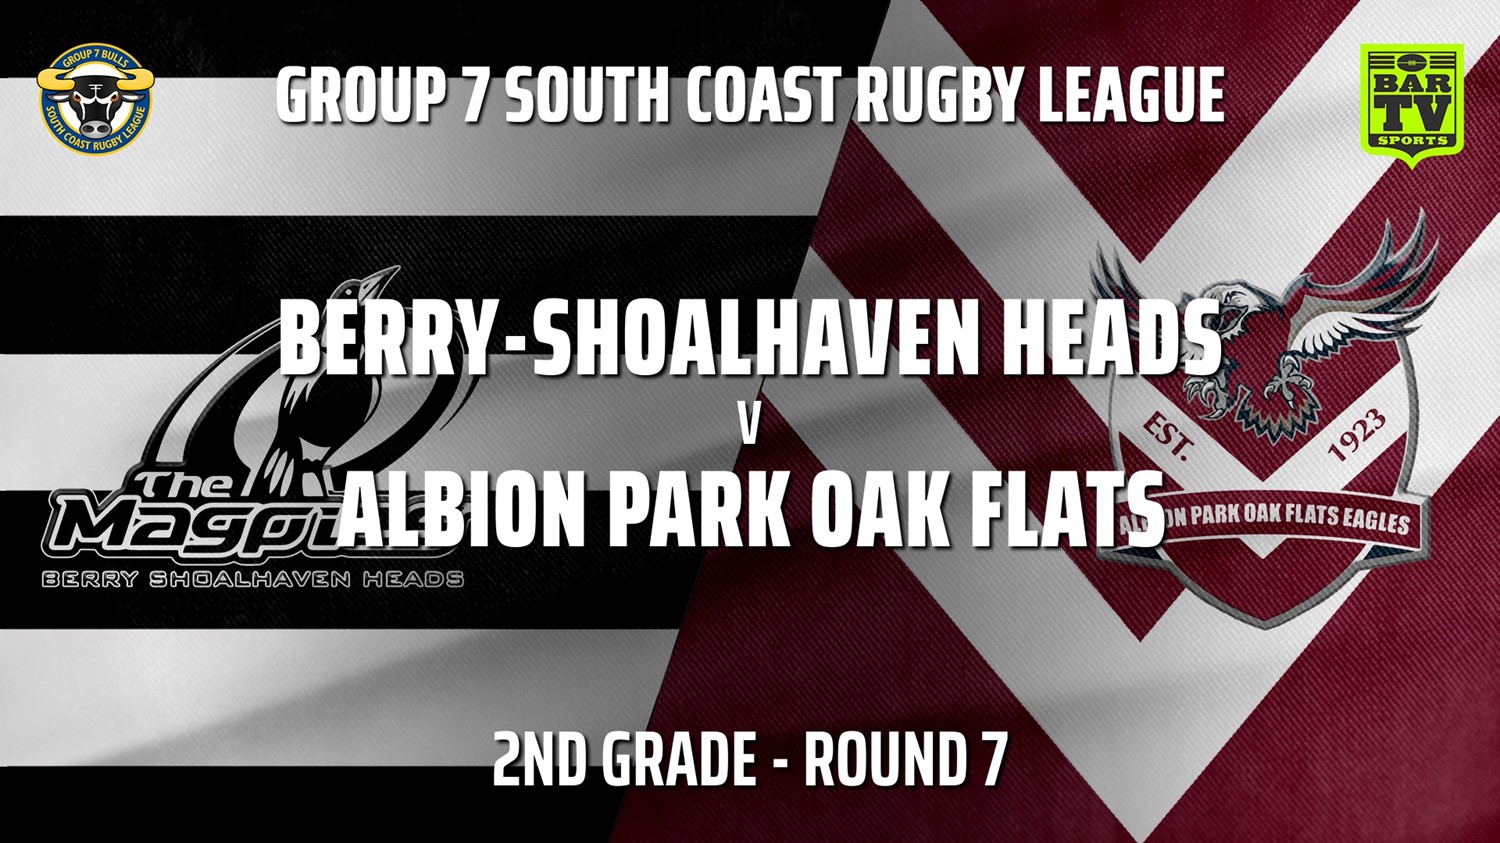 210529-Group 7 RL Round 7 - 2nd Grade - Berry-Shoalhaven Heads v Albion Park Oak Flats Slate Image